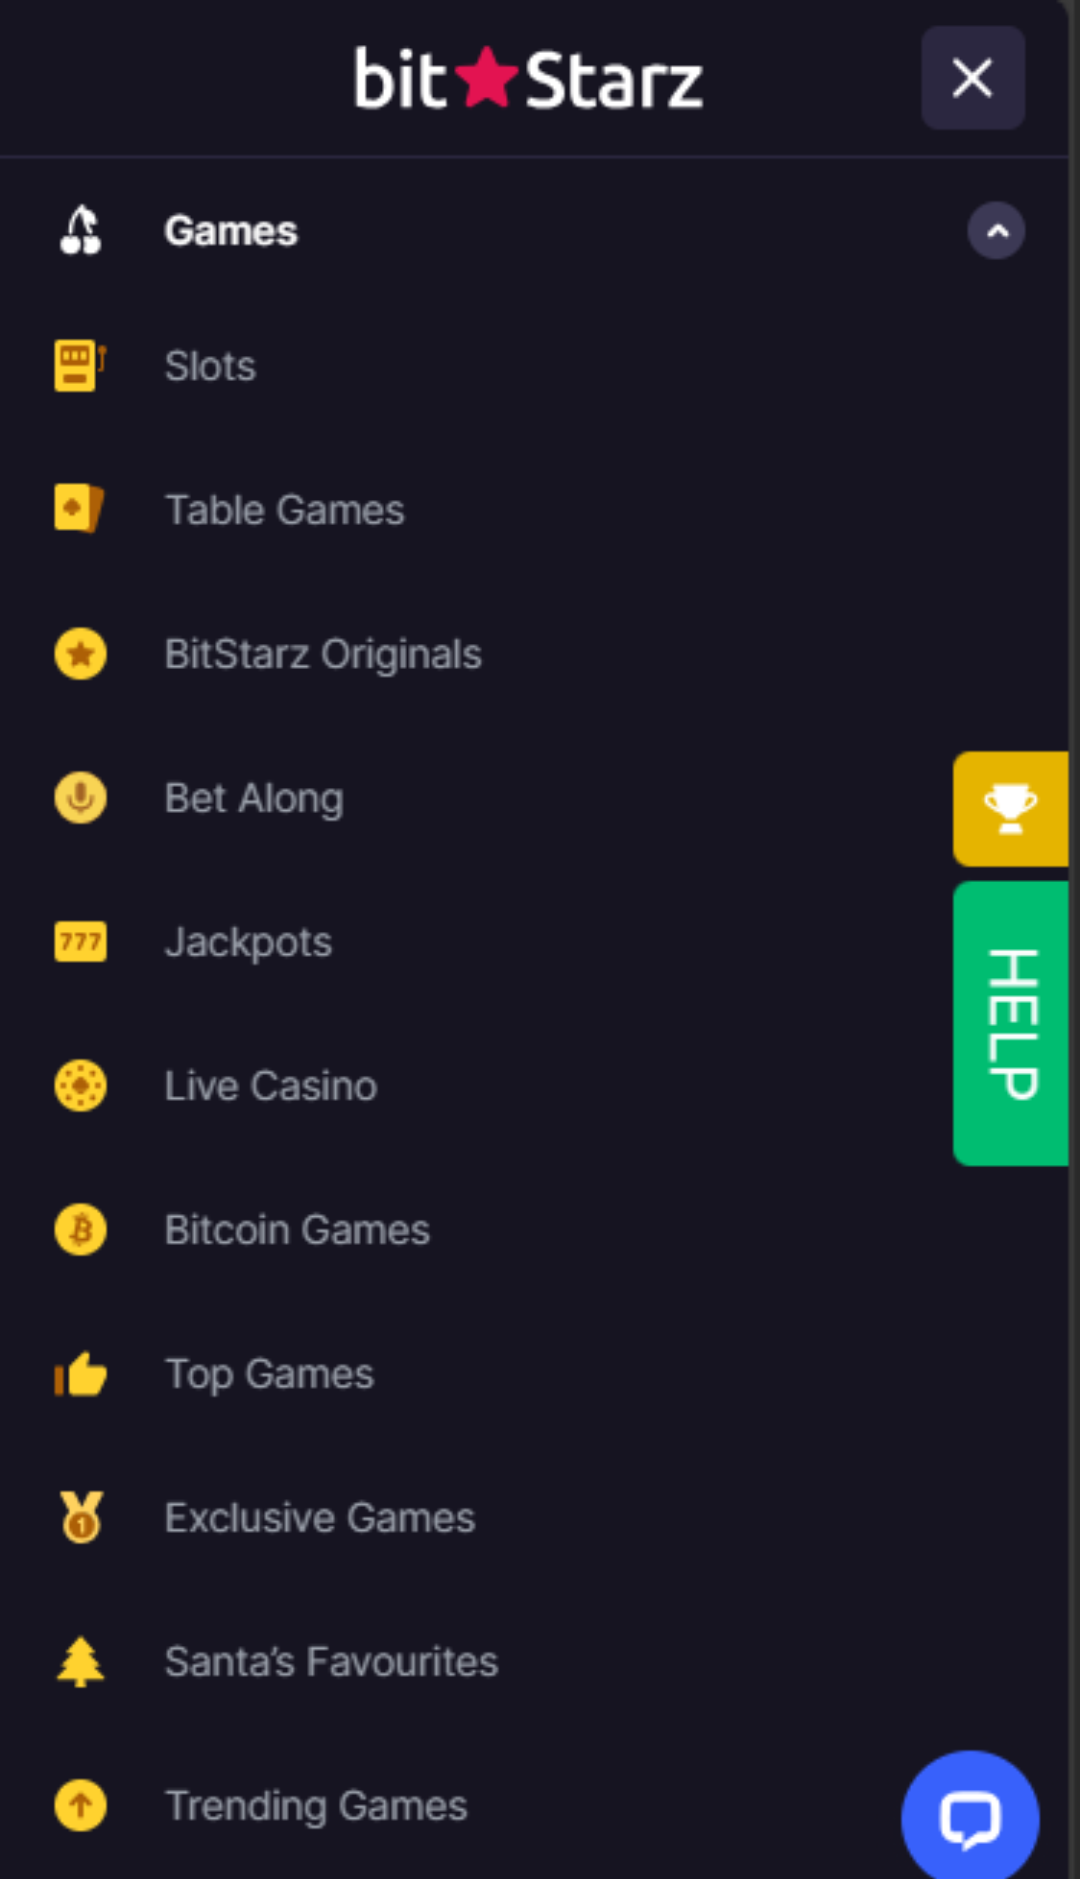 bit-starz-casino-review-games-mobile